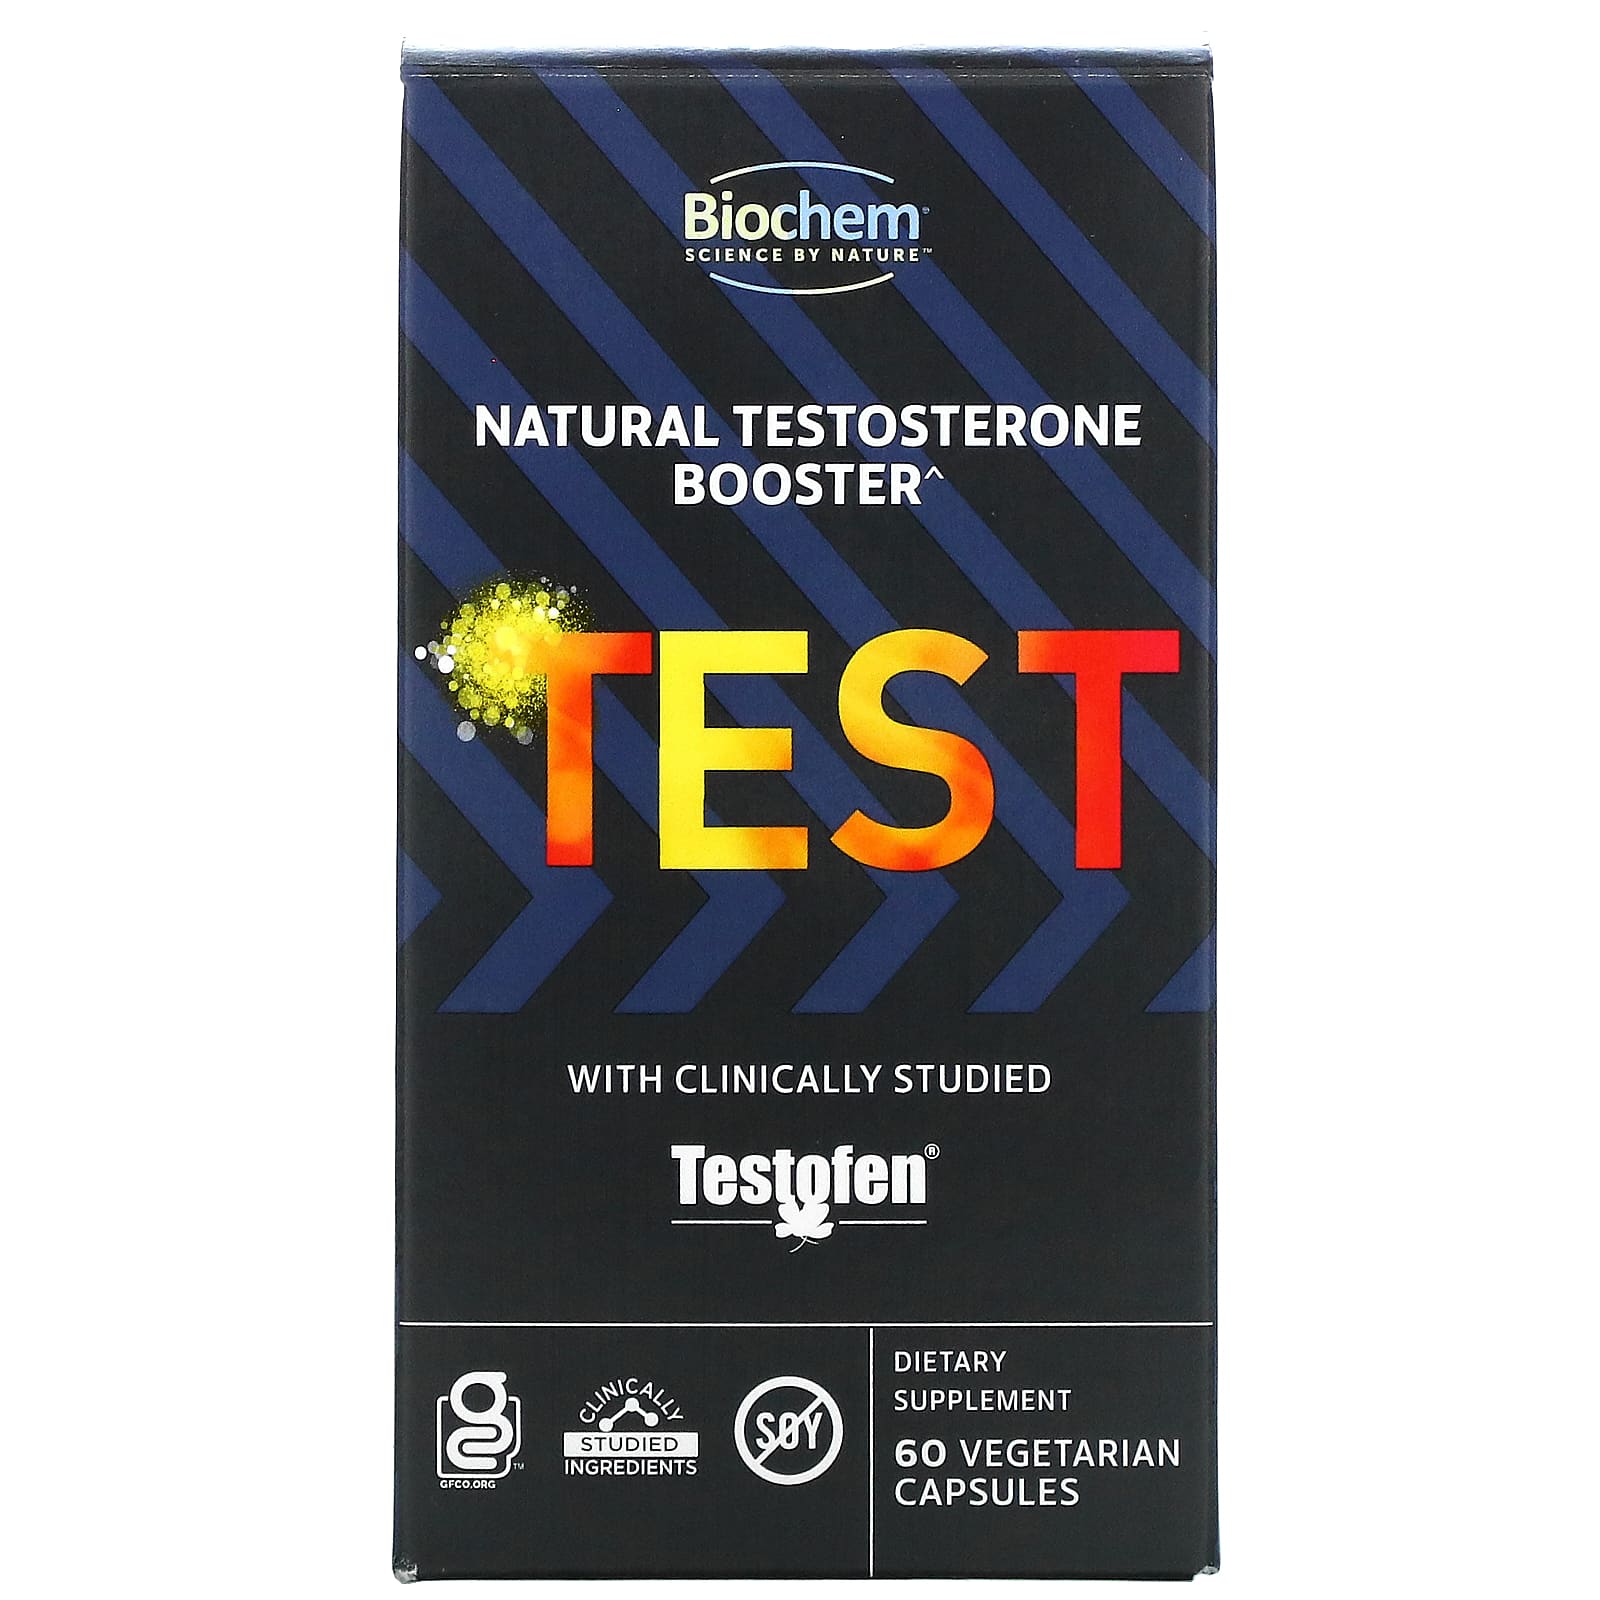 Biochem TEST натуральный усилитель тестостерона 60 вегетарианских капсул muscletech performance series test hd thermo термогенный усилитель выработки тестостерона 90 капсул